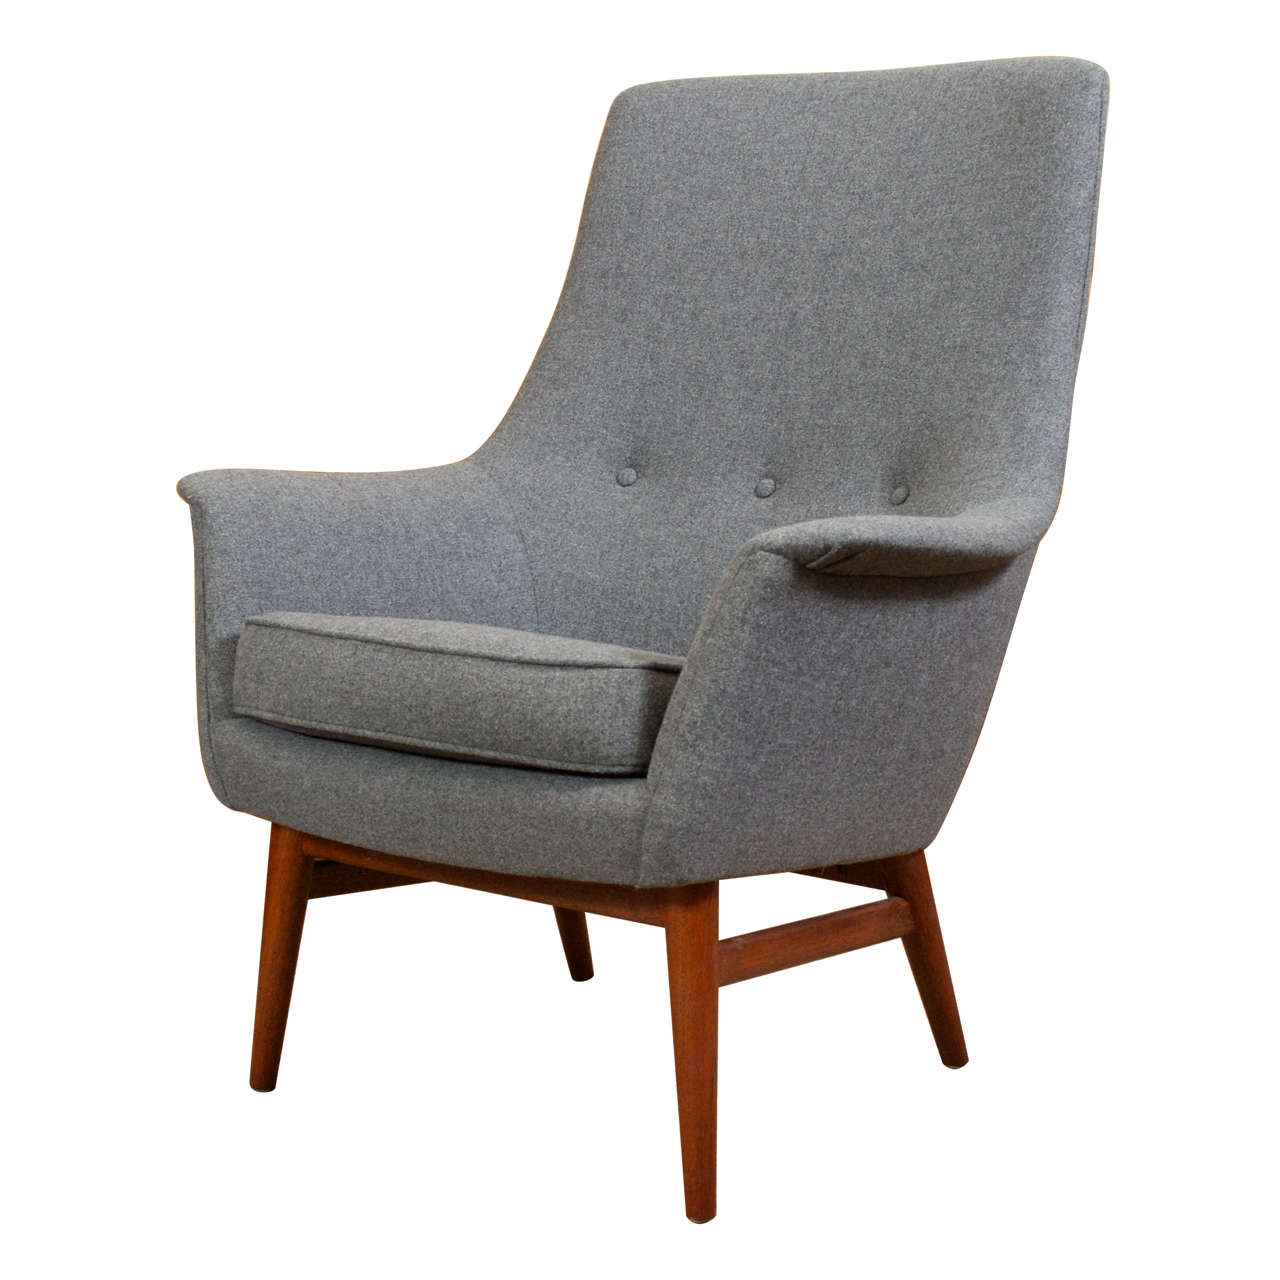 Danish Modern Lounge Chair at 1stdibs